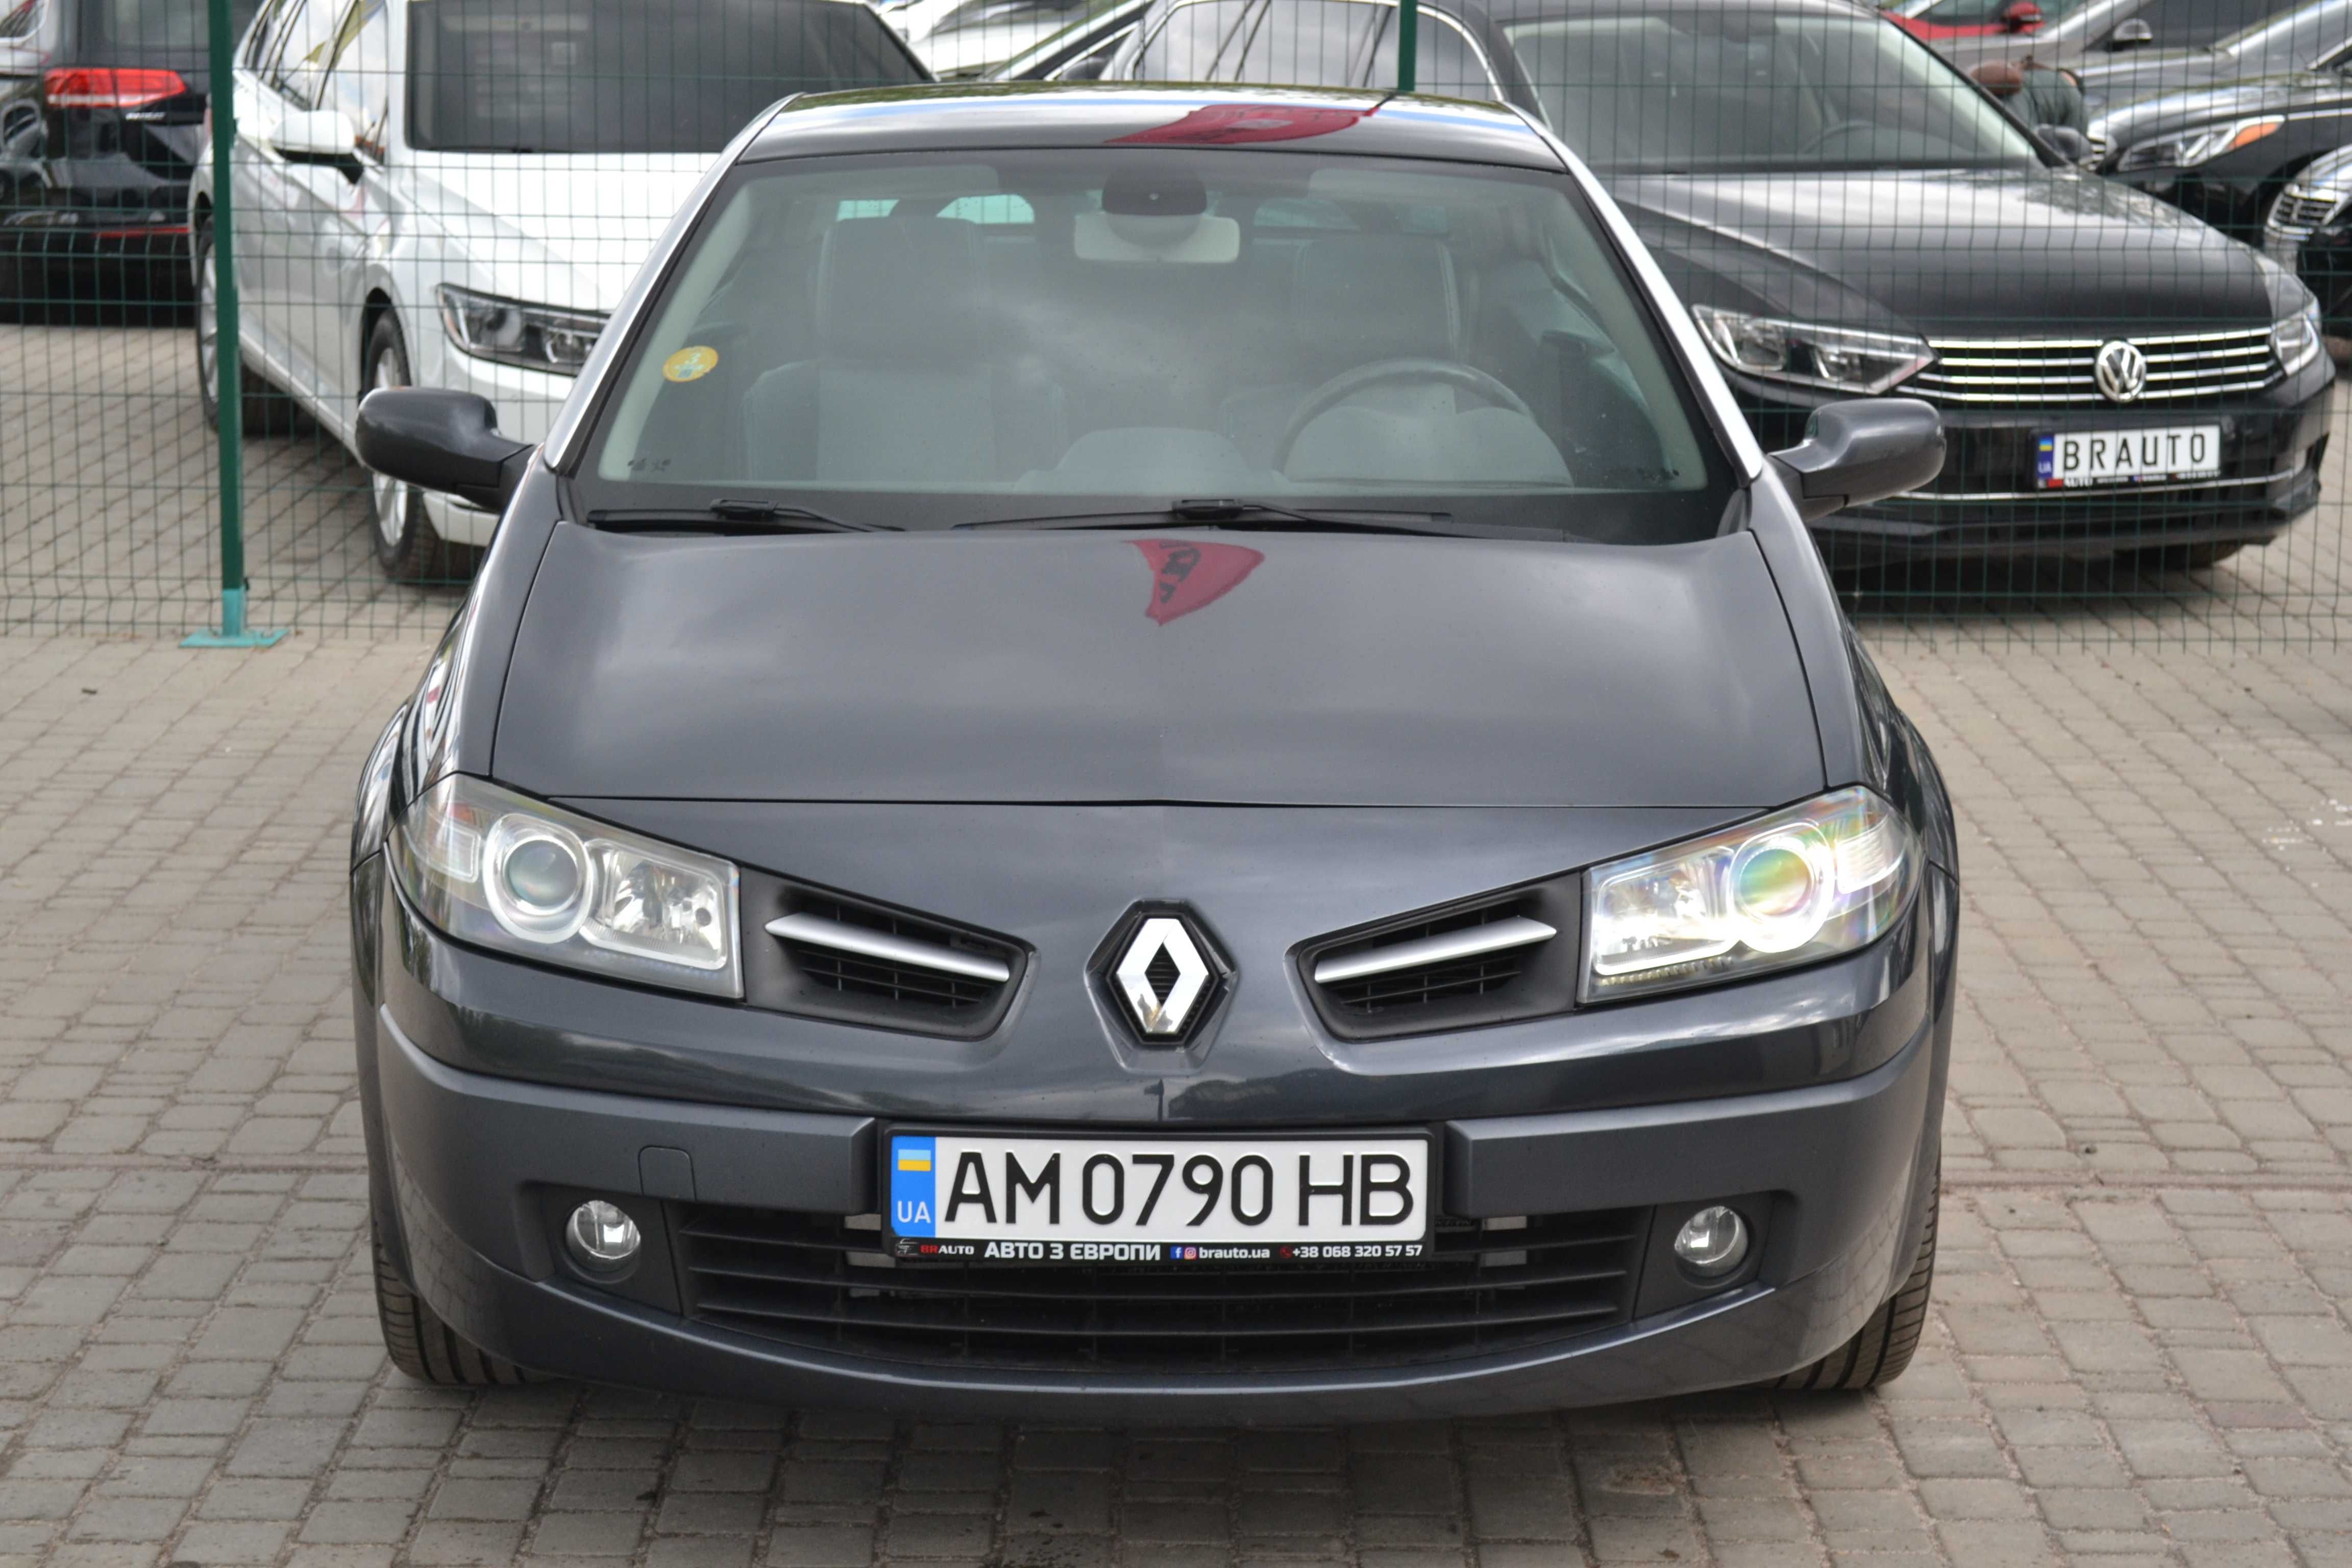 Renault Megane 2009